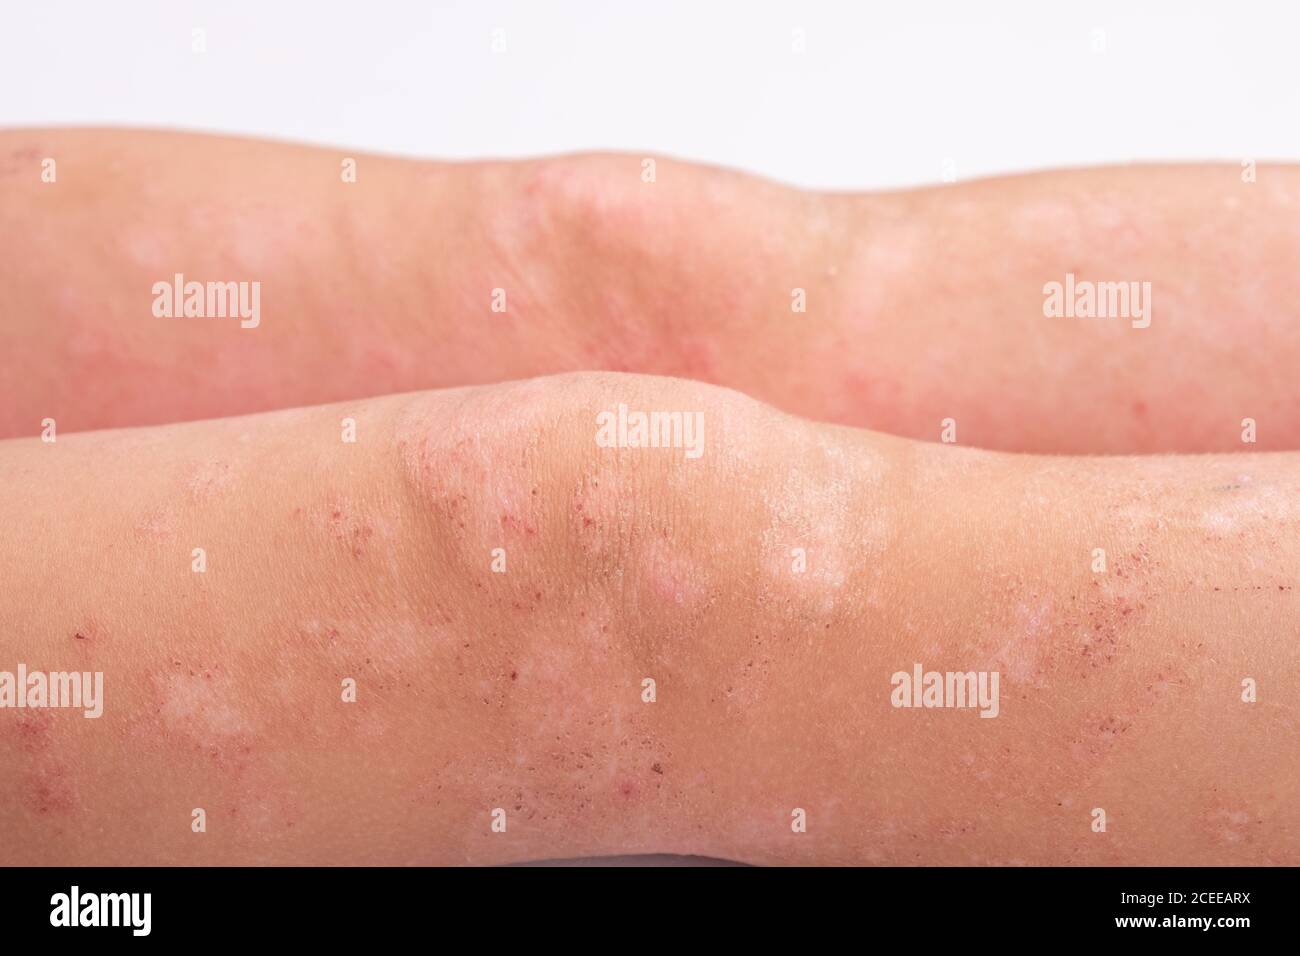 manifestation of dermatitis on the child's body, rash on the legs close-up, redness on the skin, allergic reaction. Stock Photo